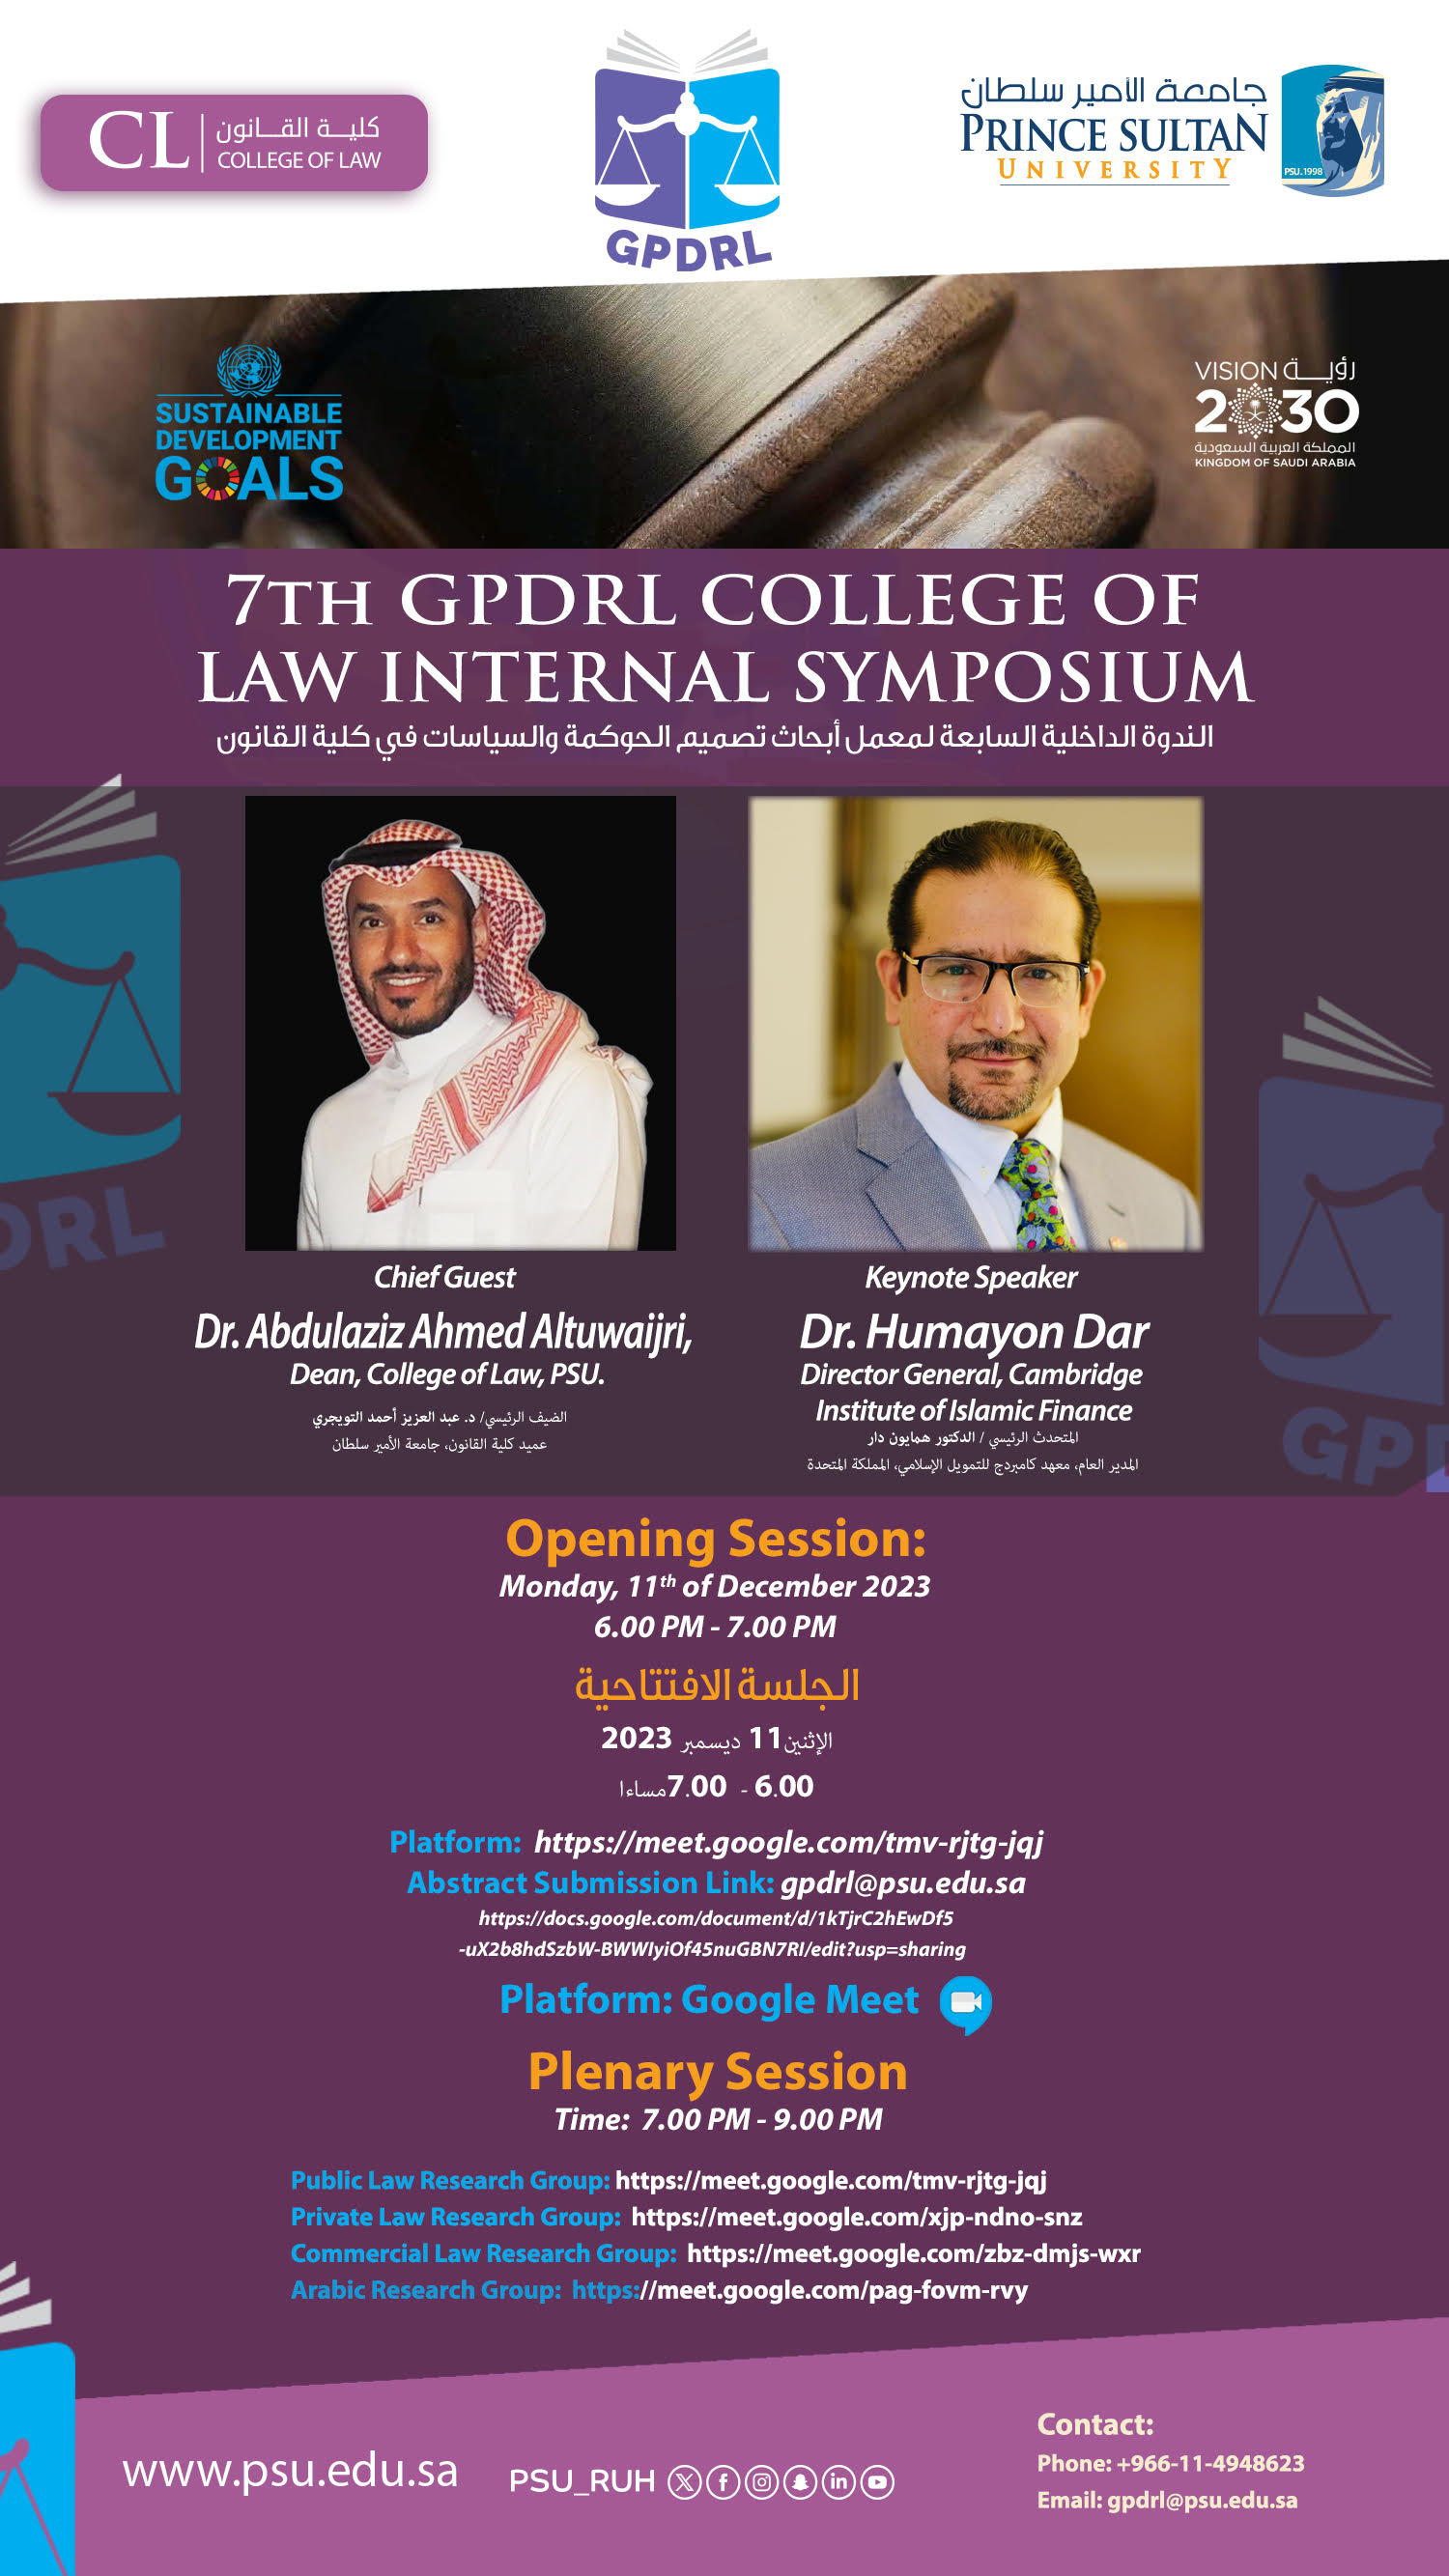 The 7th GPDRL College of Law Internal Symposium